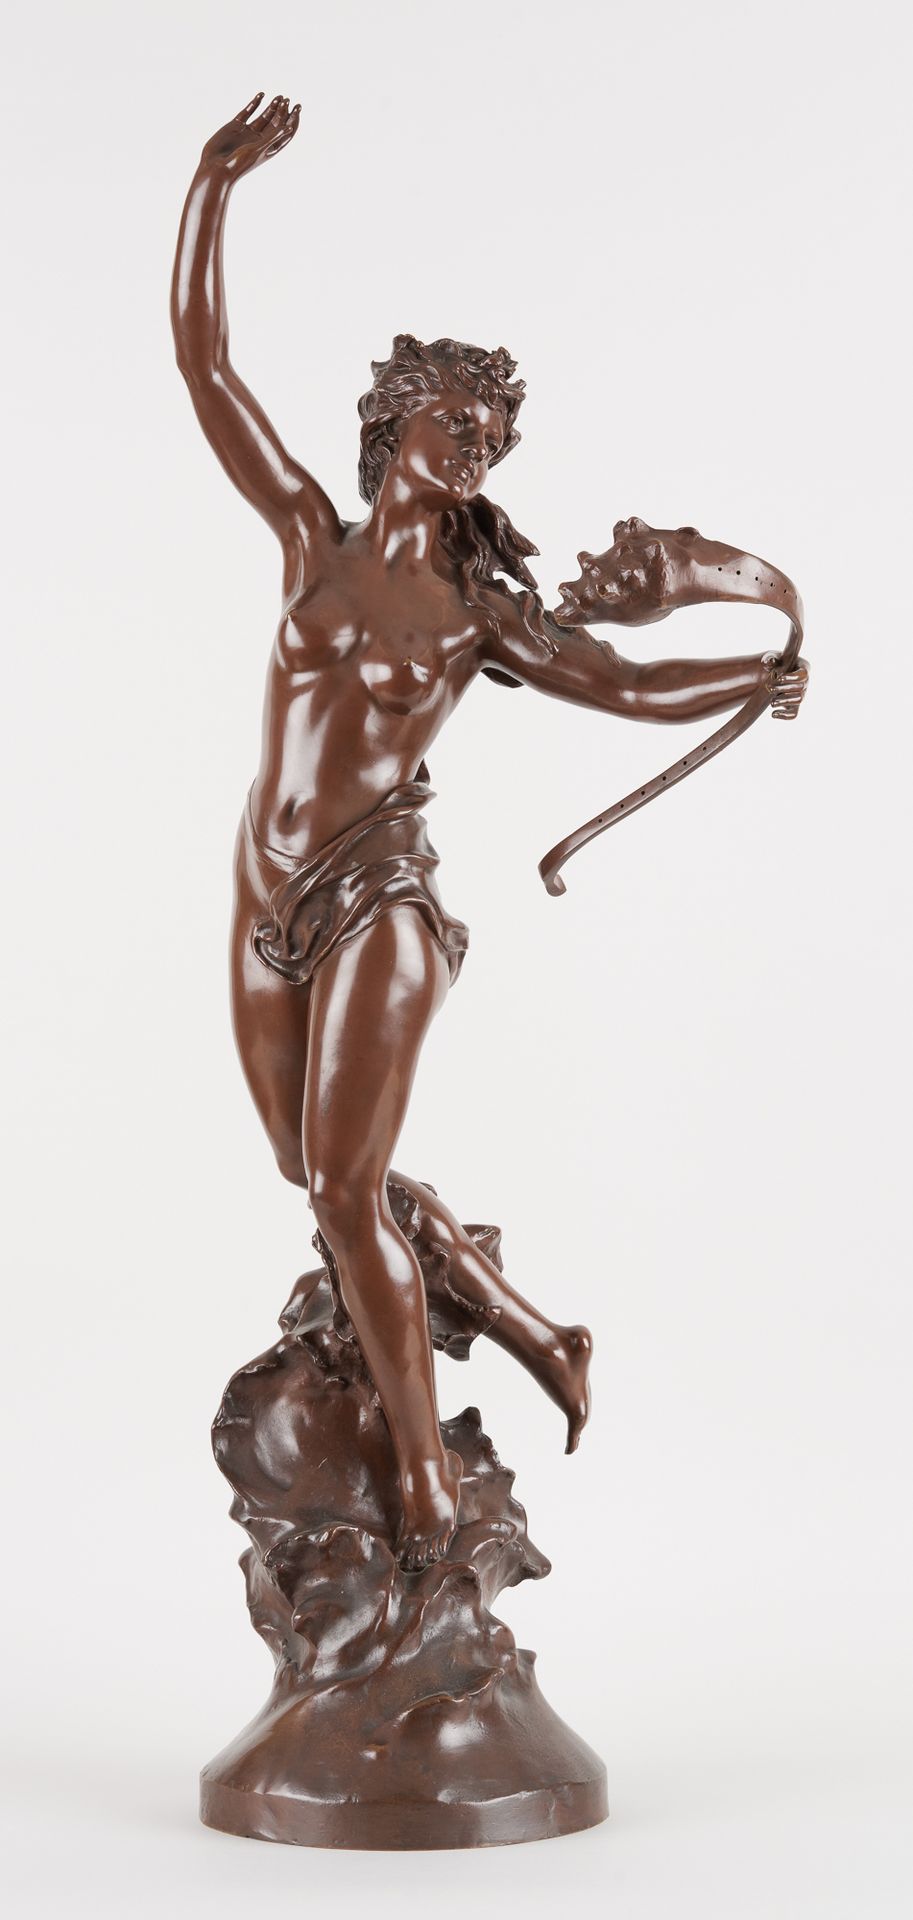 Marcel DÉBUT École française (1865-1933) Scultura in bronzo con una patina marro&hellip;